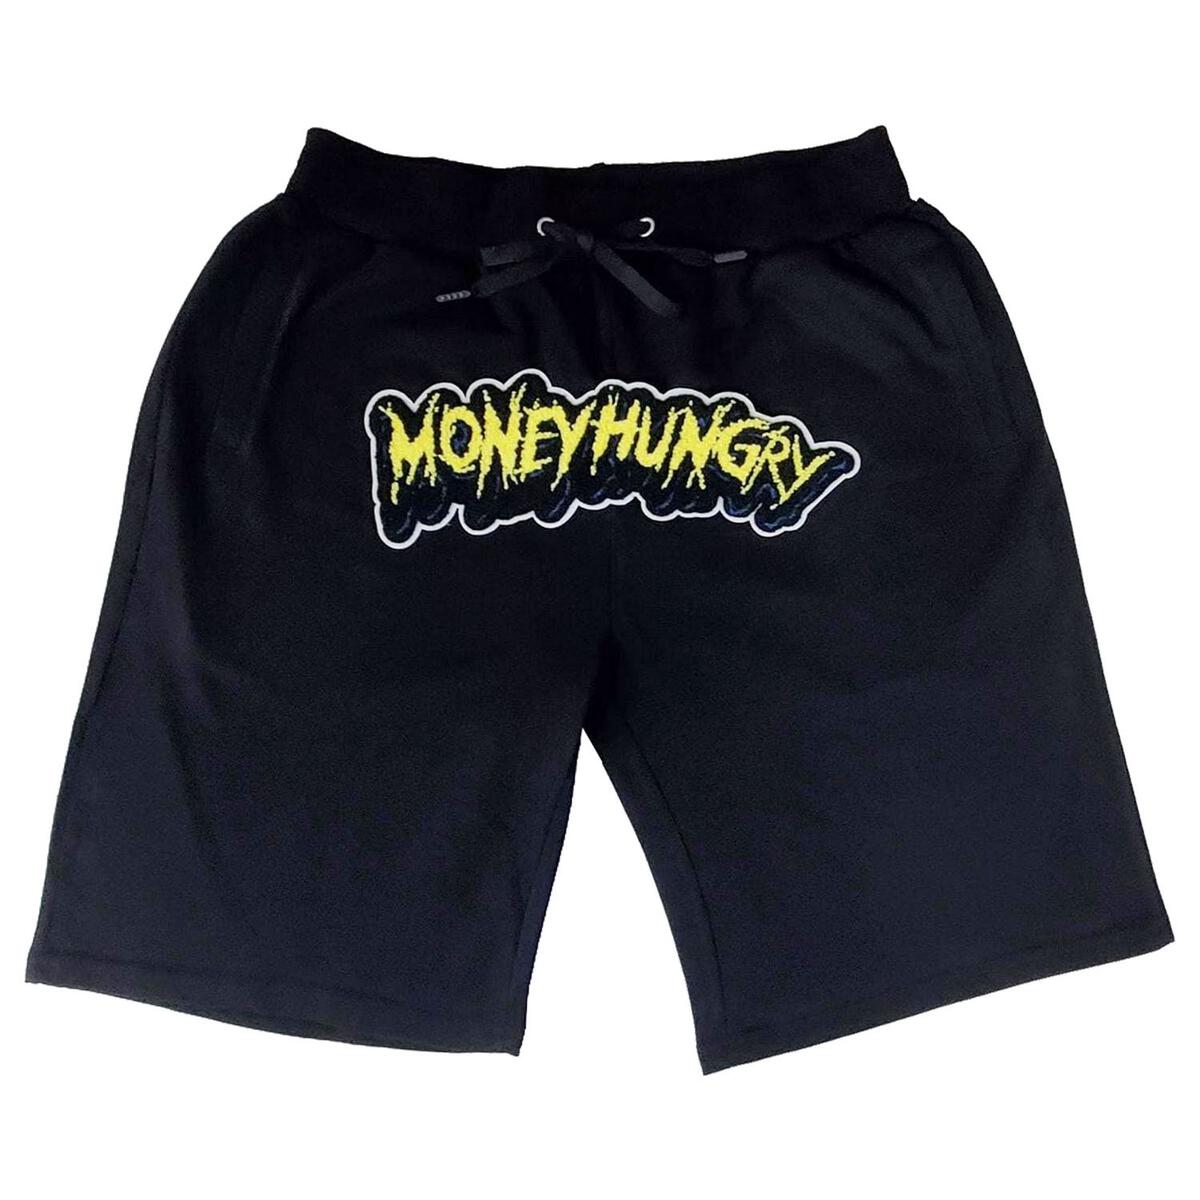 Money Hungry Shorts